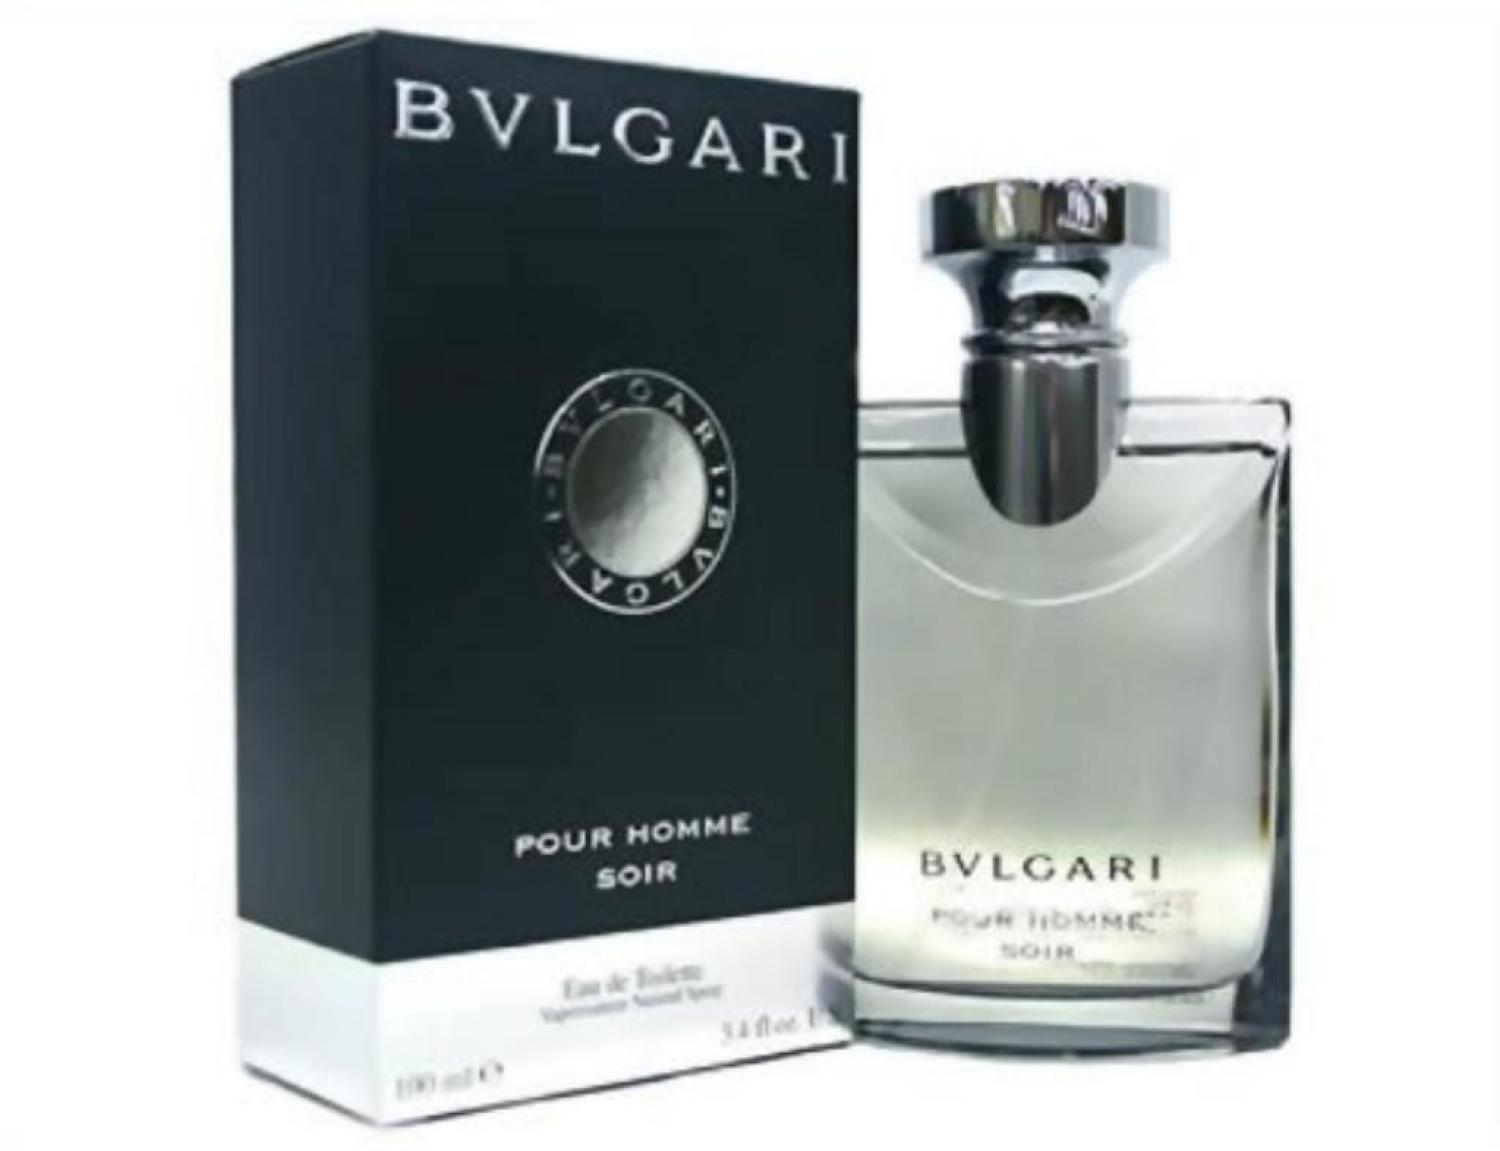 bvlgari soir perfume